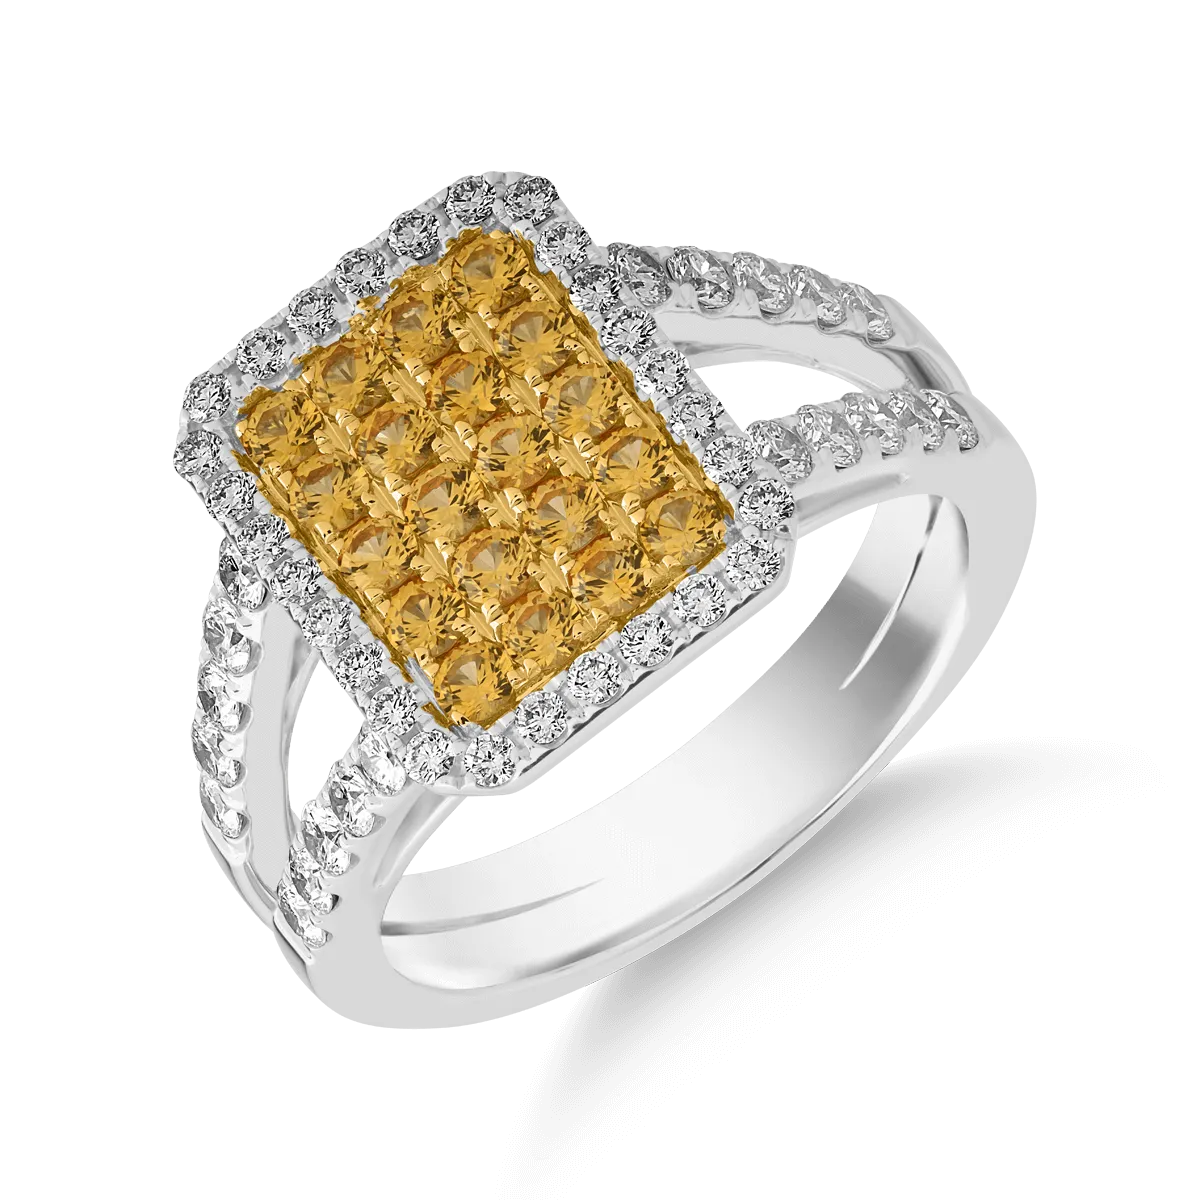 Inel din aur alb-galben de 18K cu safire galbene de 0.67ct si diamante de 0.69ct